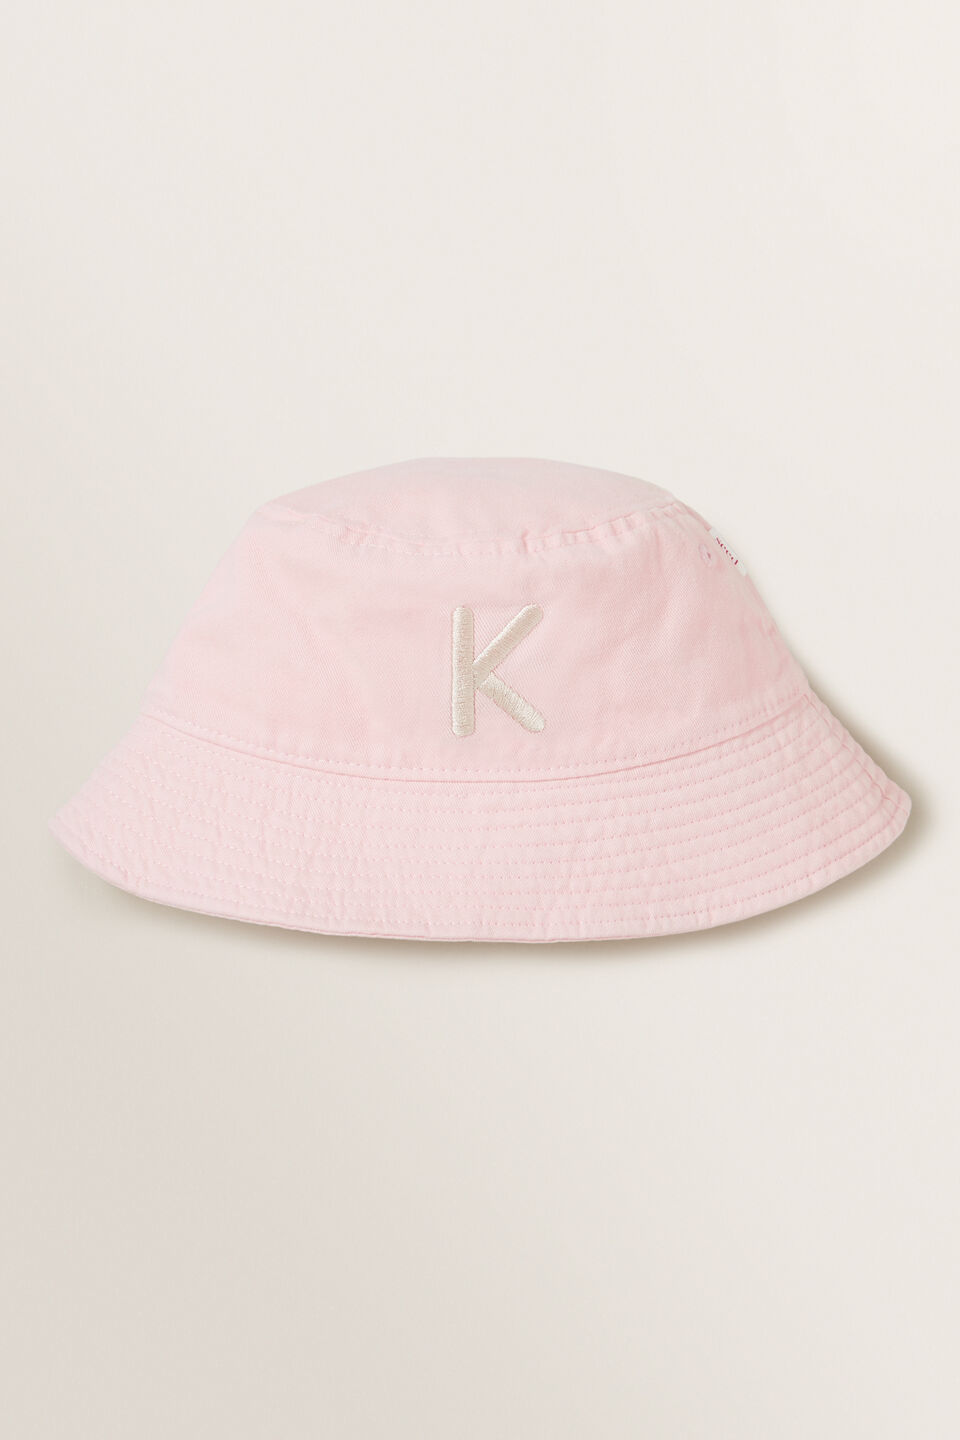 Initial Bucket Hat  K